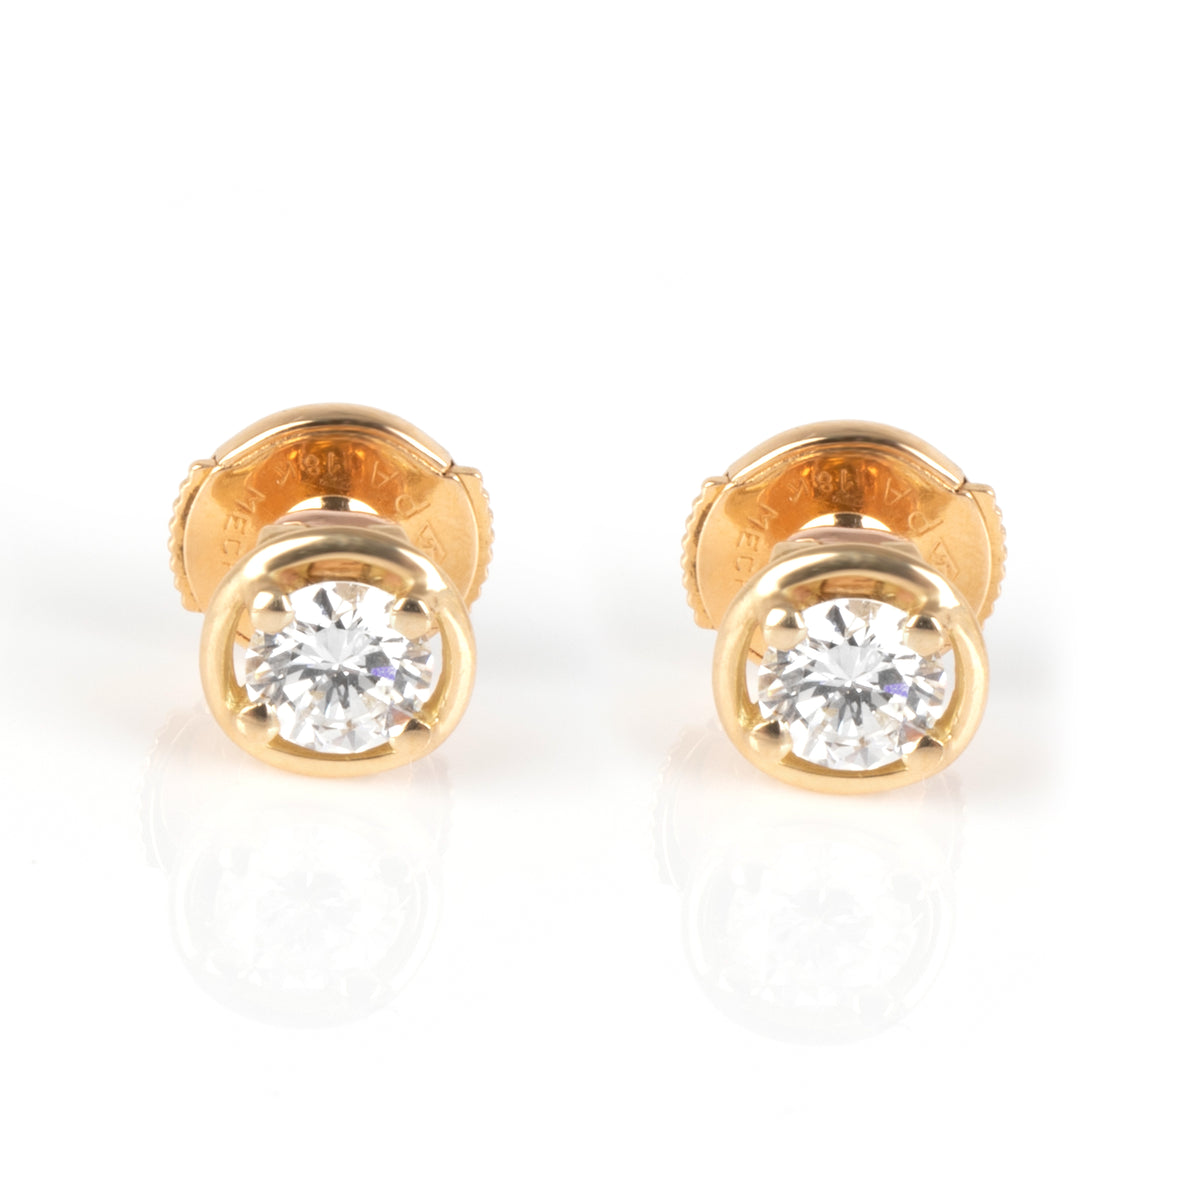 Van Cleef & Arpels La Pluie Diamond Drop Earrings in 18K Yellow Gold D VVS1 1